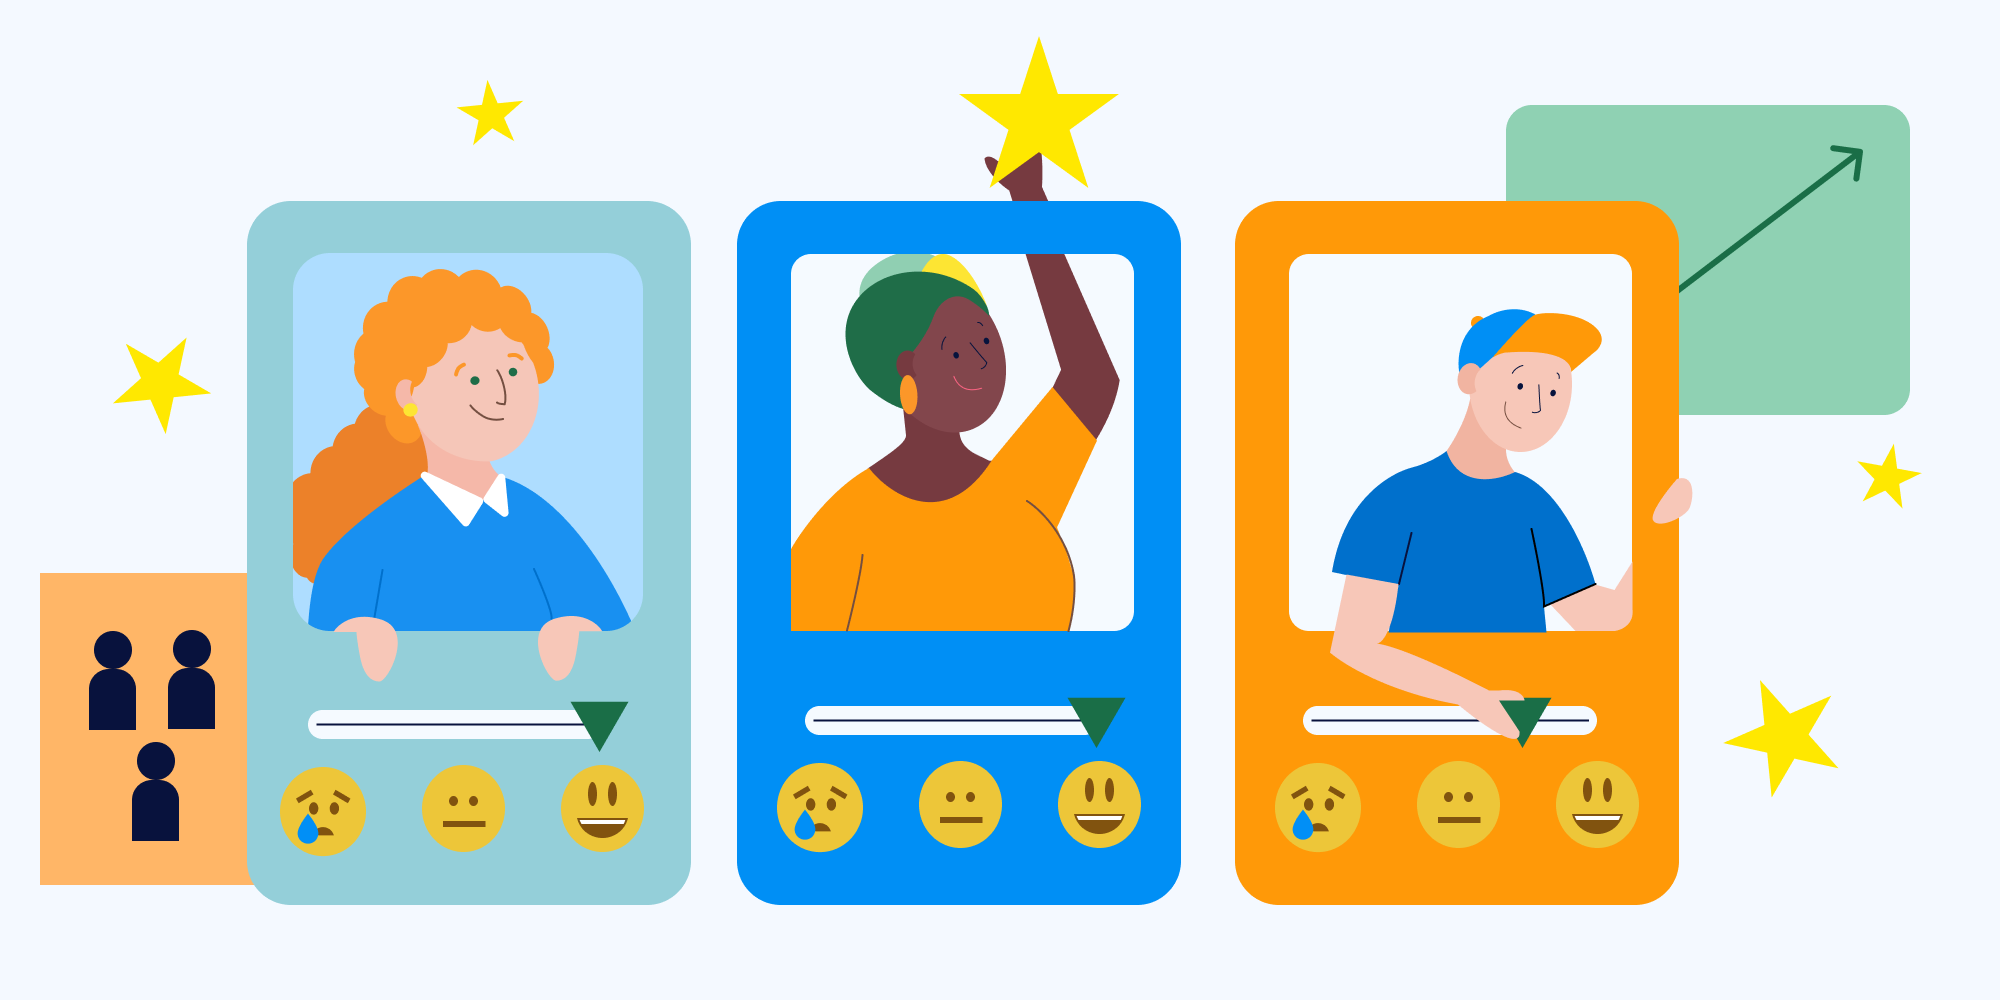 eNPS: illustration of employees reactions using emojis